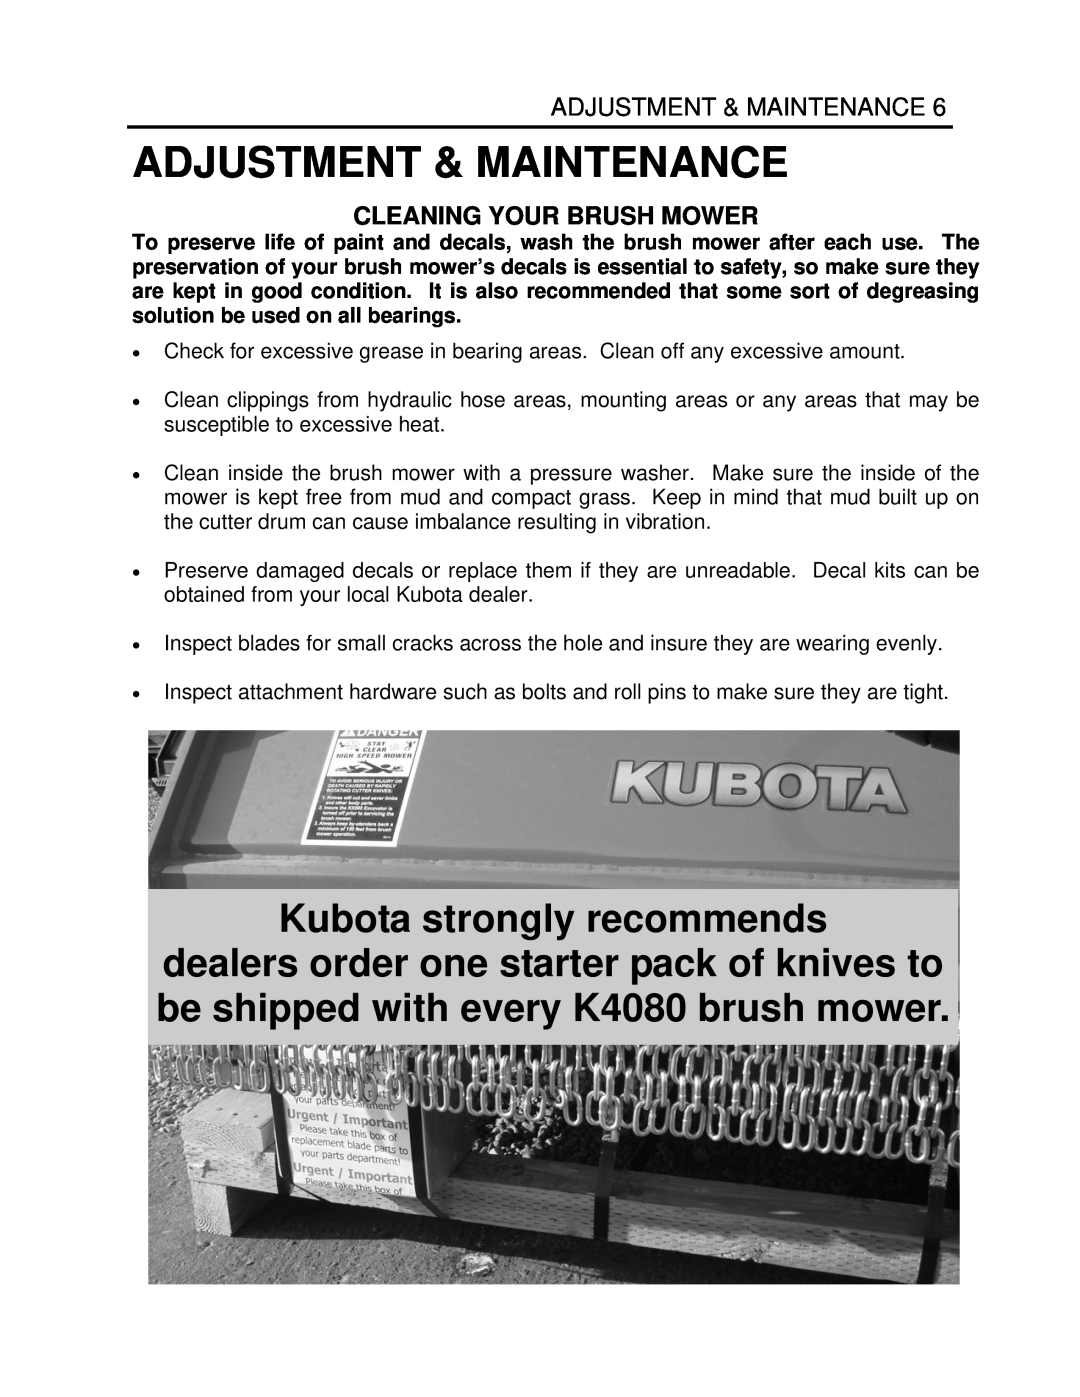 Generac Power Systems K4080 manual Adjustment & Maintenance, Kubota strongly recommends 